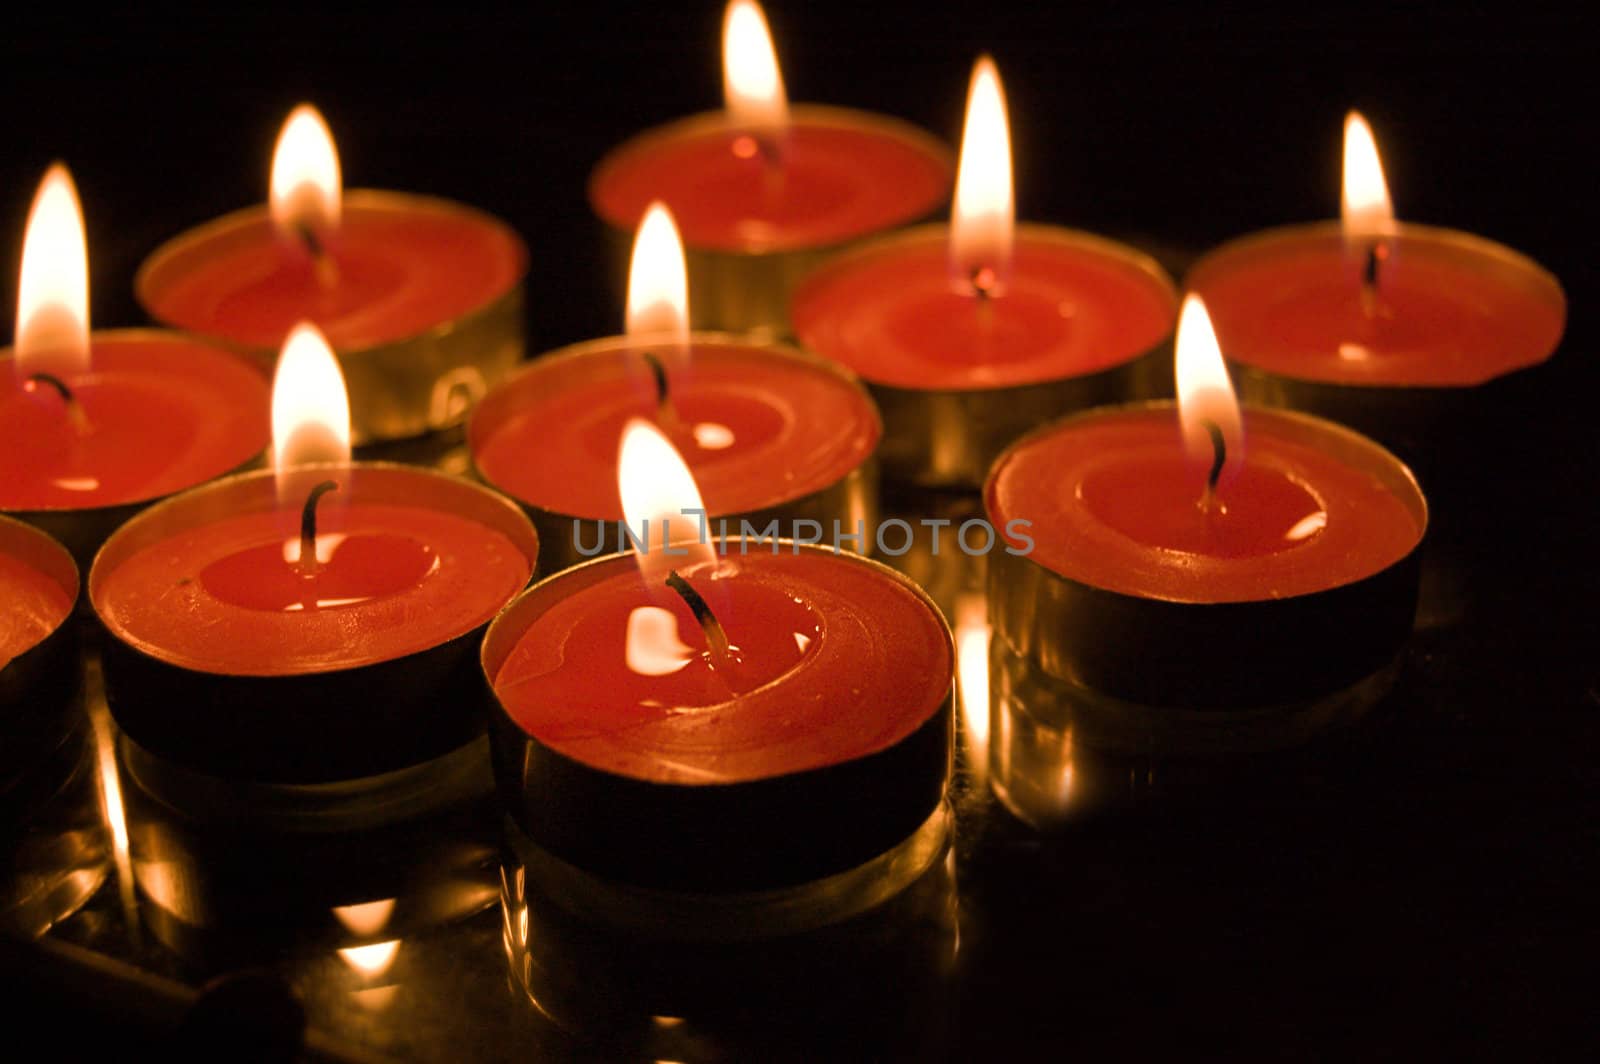 lit candles on black background